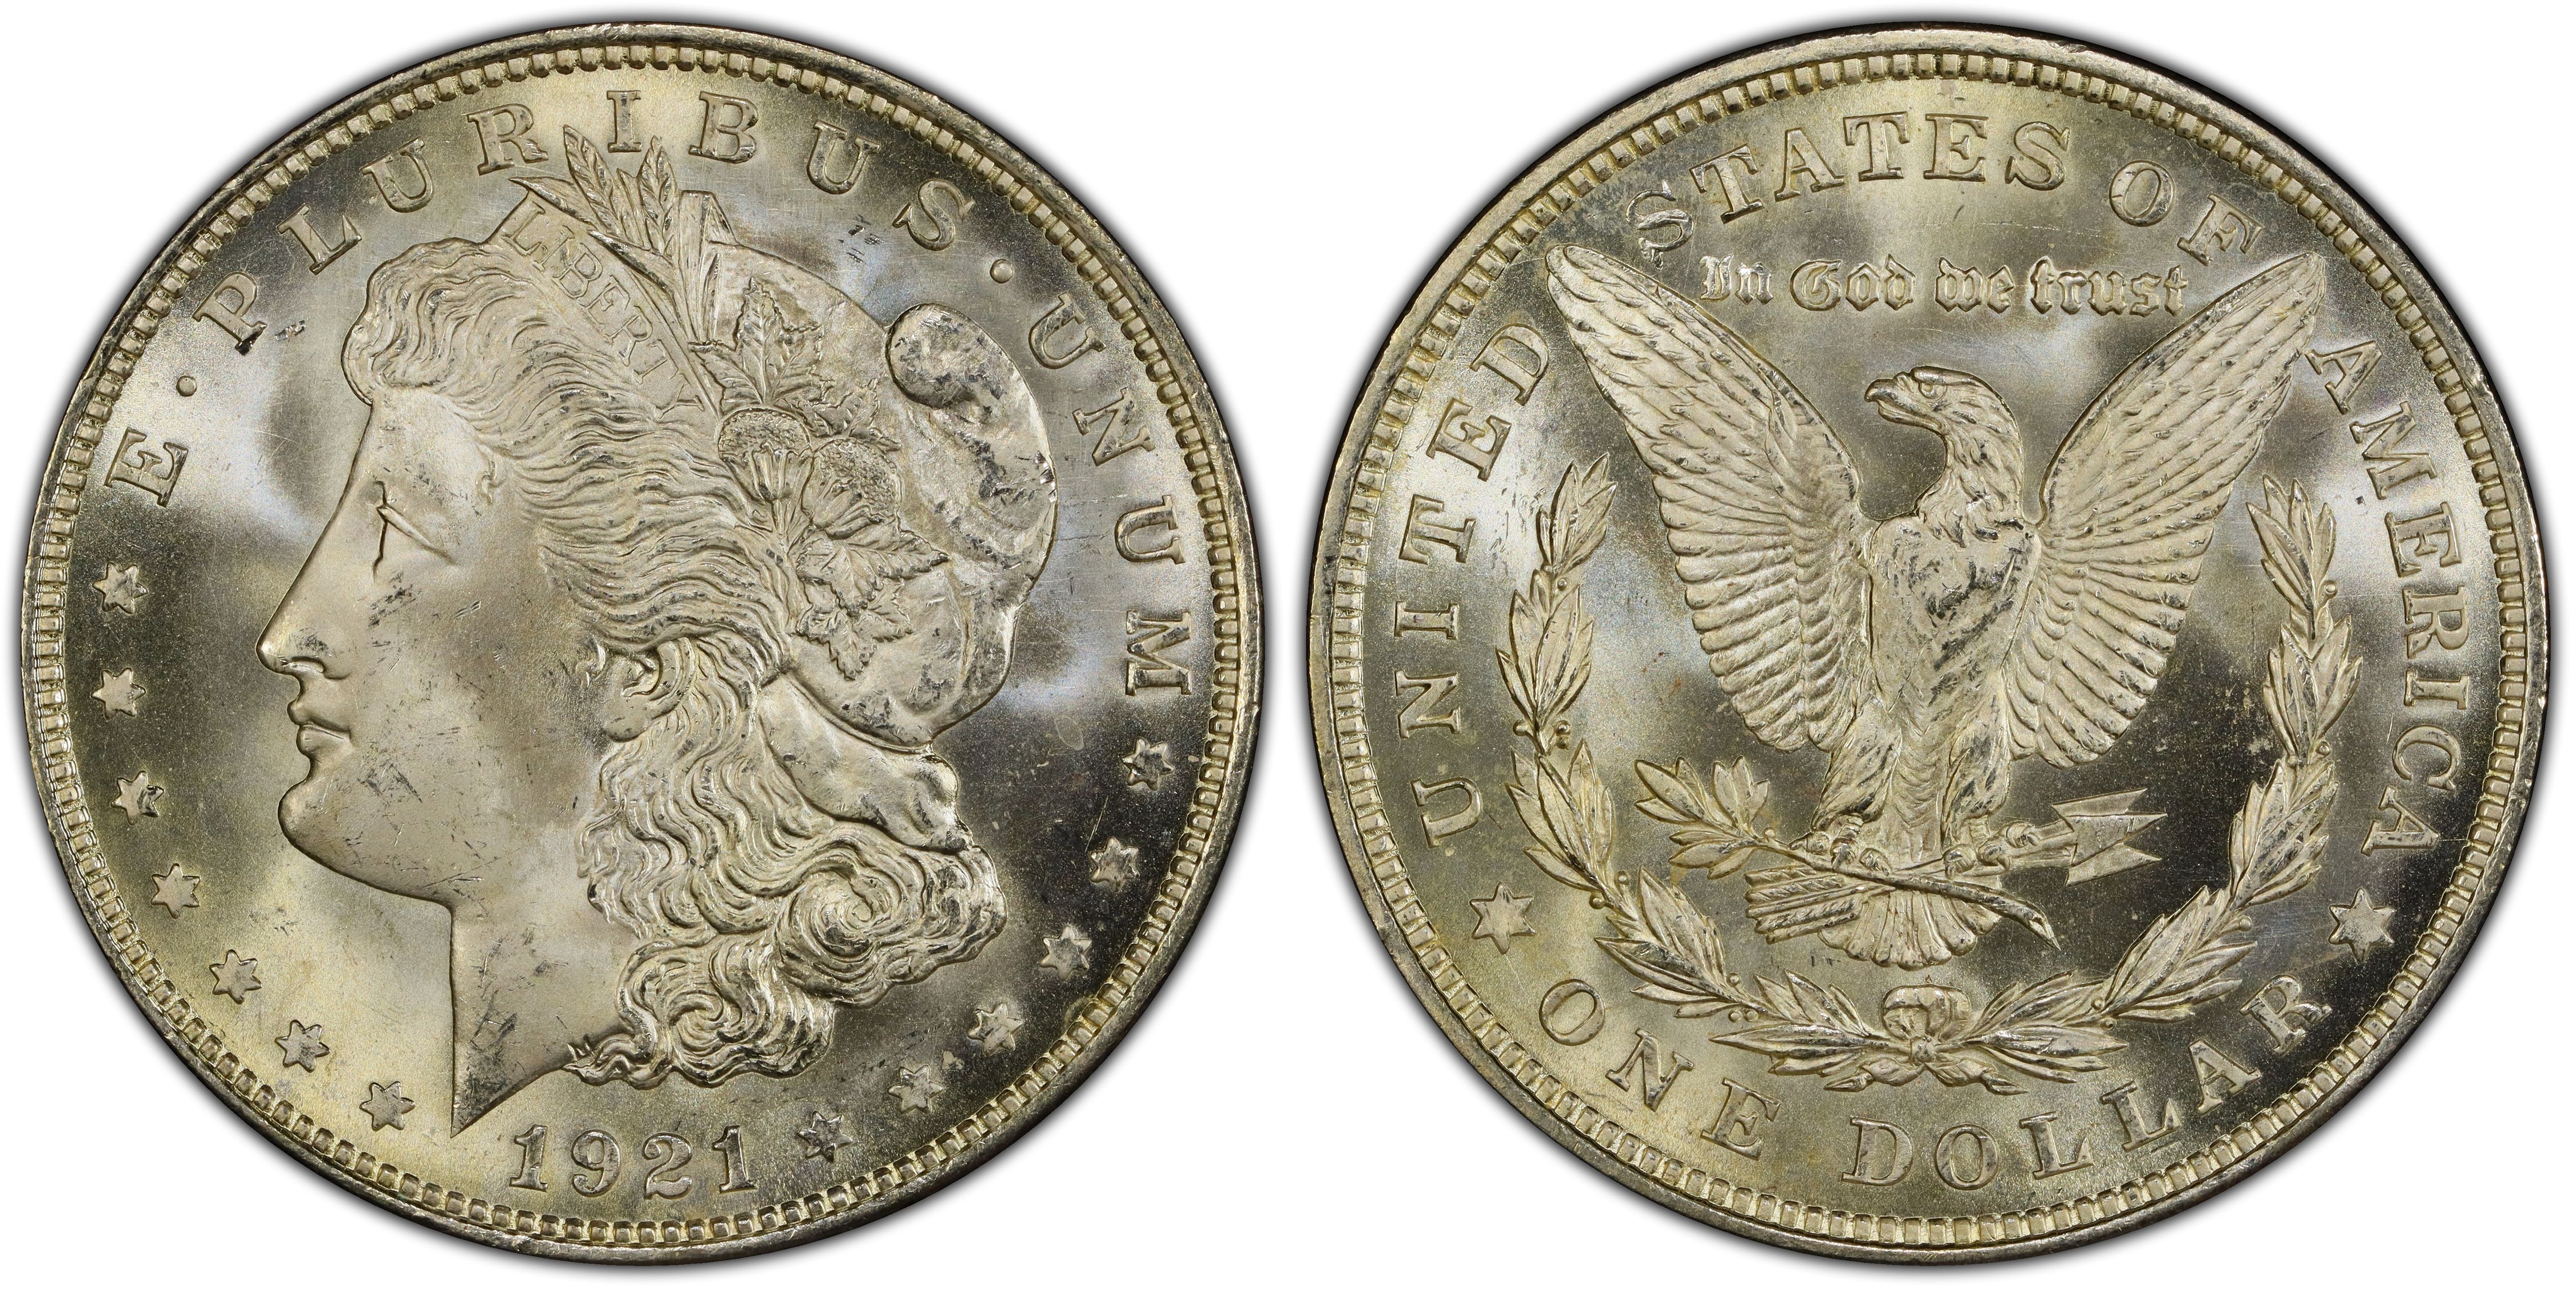 1921 $1 Morgan (Regular Strike) Morgan Dollar - PCGS CoinFacts